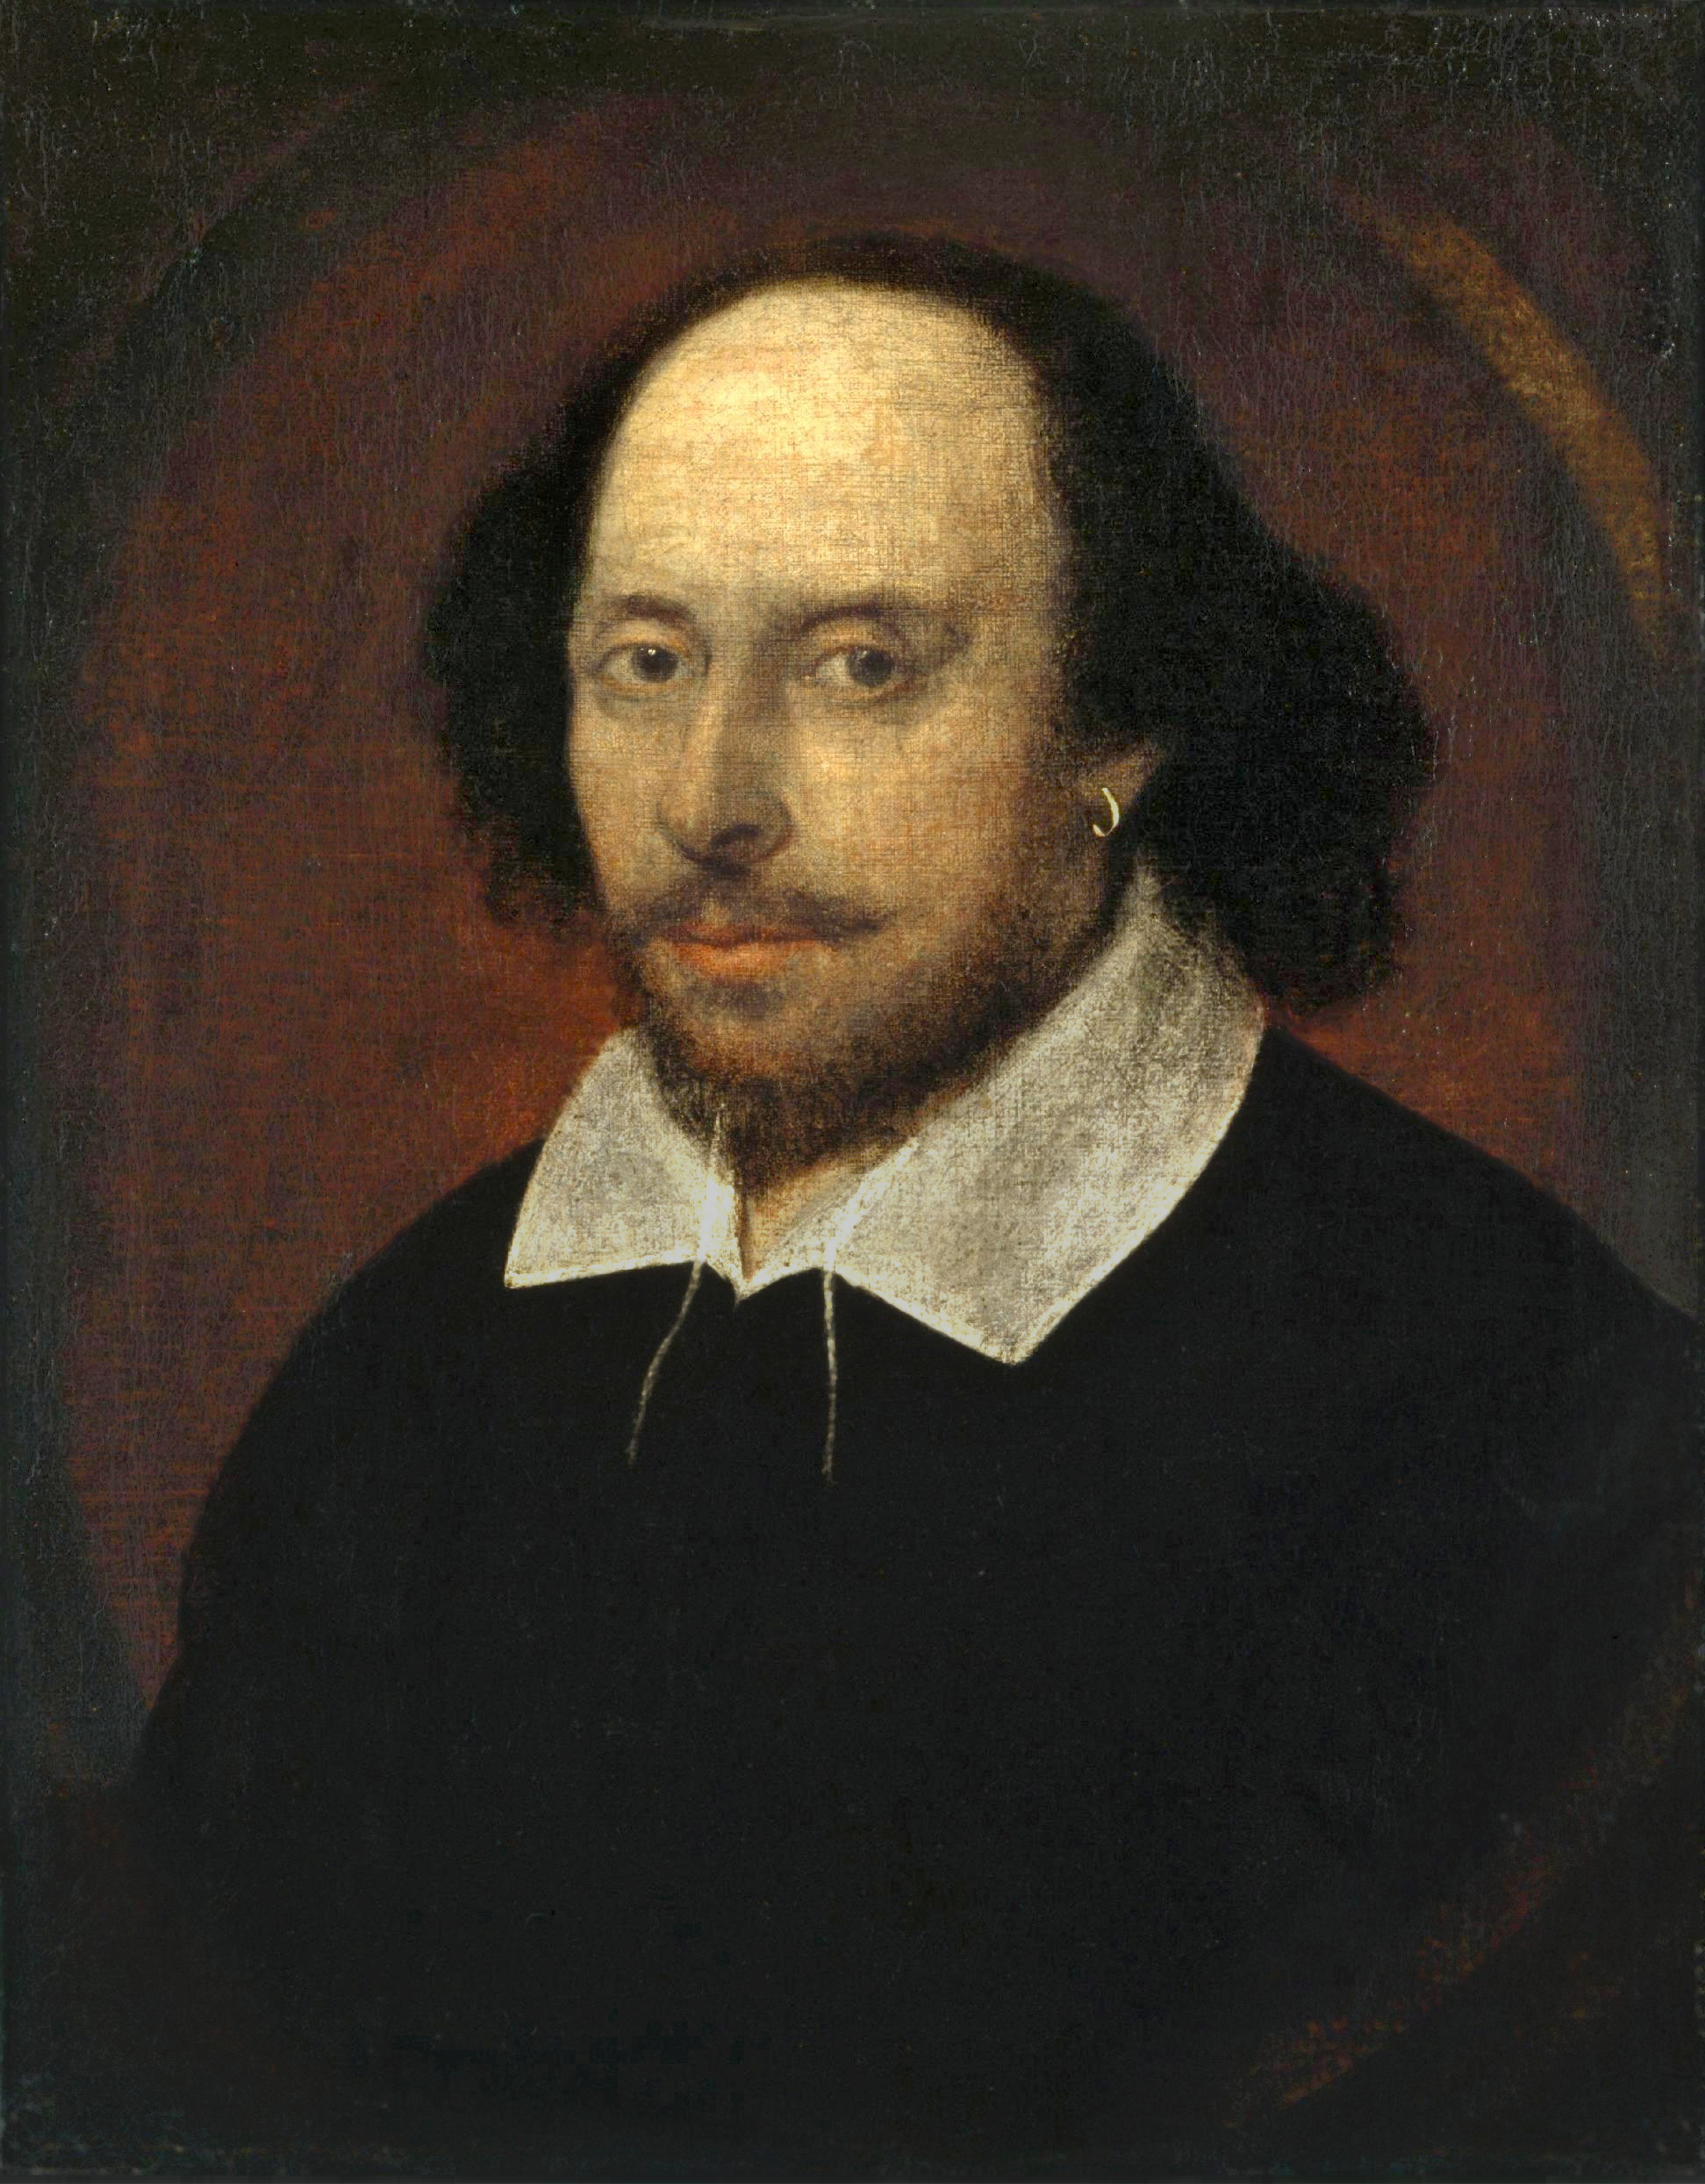 April 23 1616 - William Shakespeare Dies in Stratford-upon-Avon